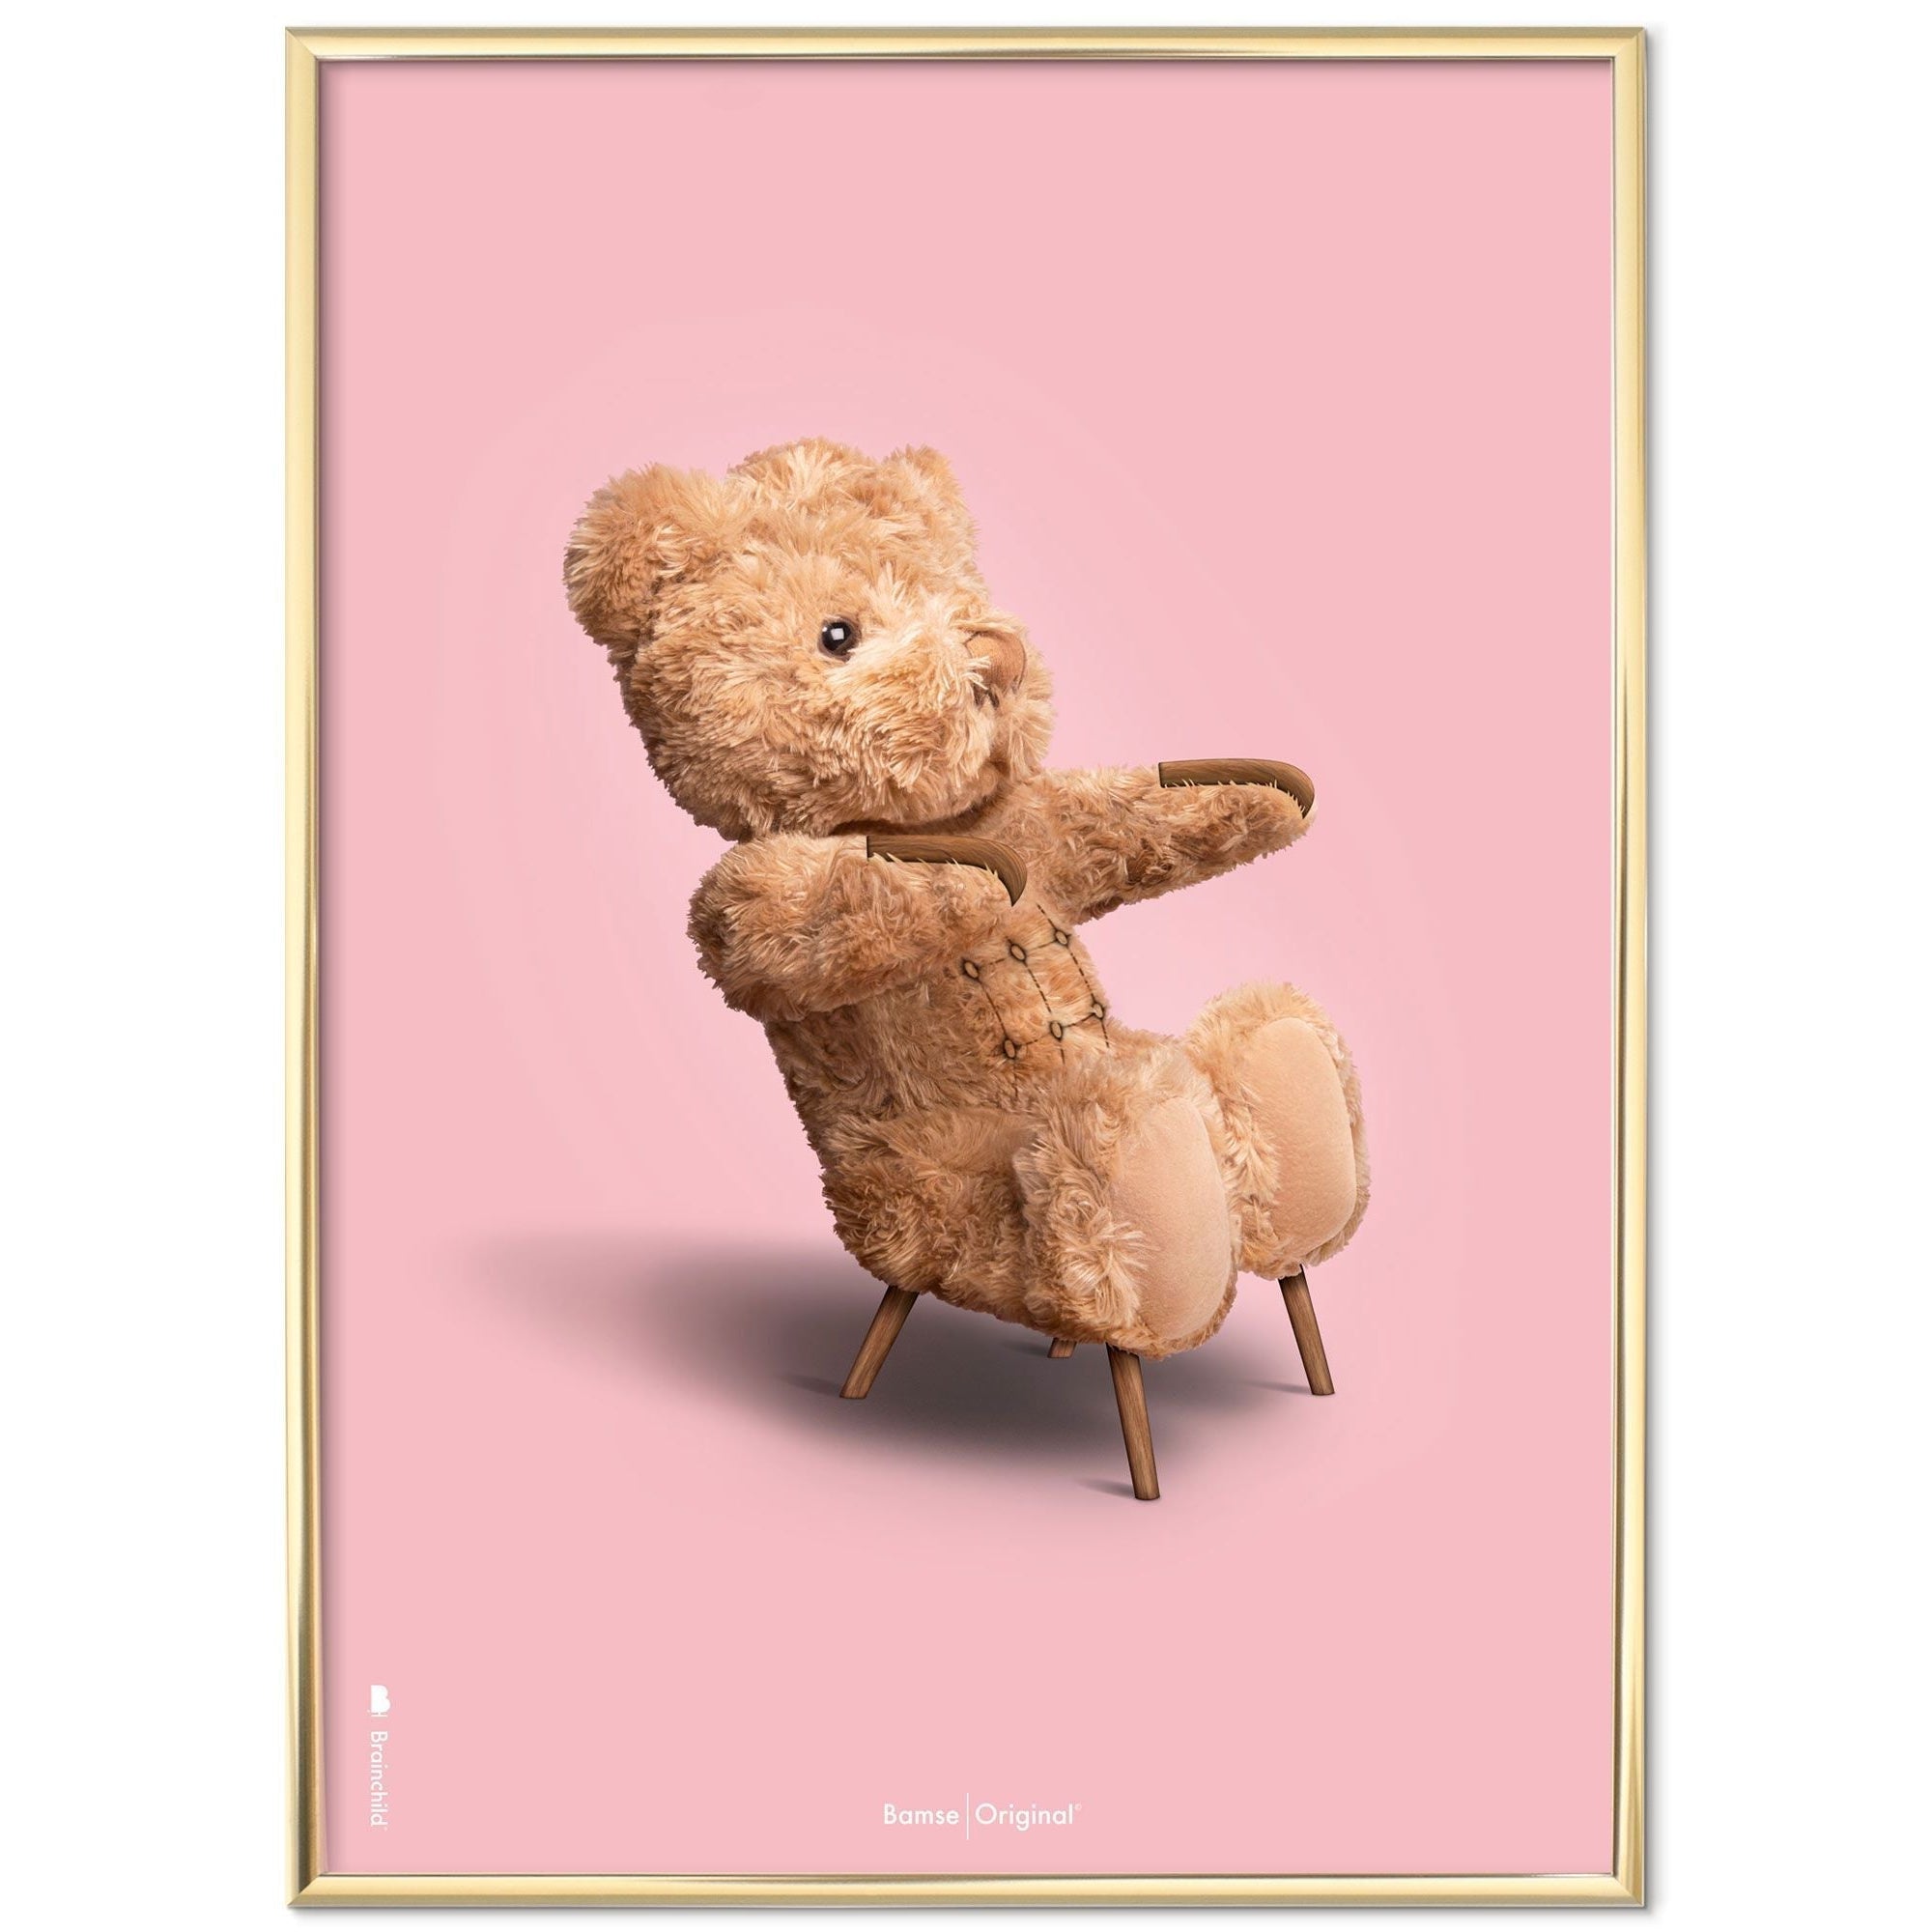 Brainchild Teddybär Classic Poster Messingfarbener Rahmen 50x70 Cm, Rosa Hintergrund